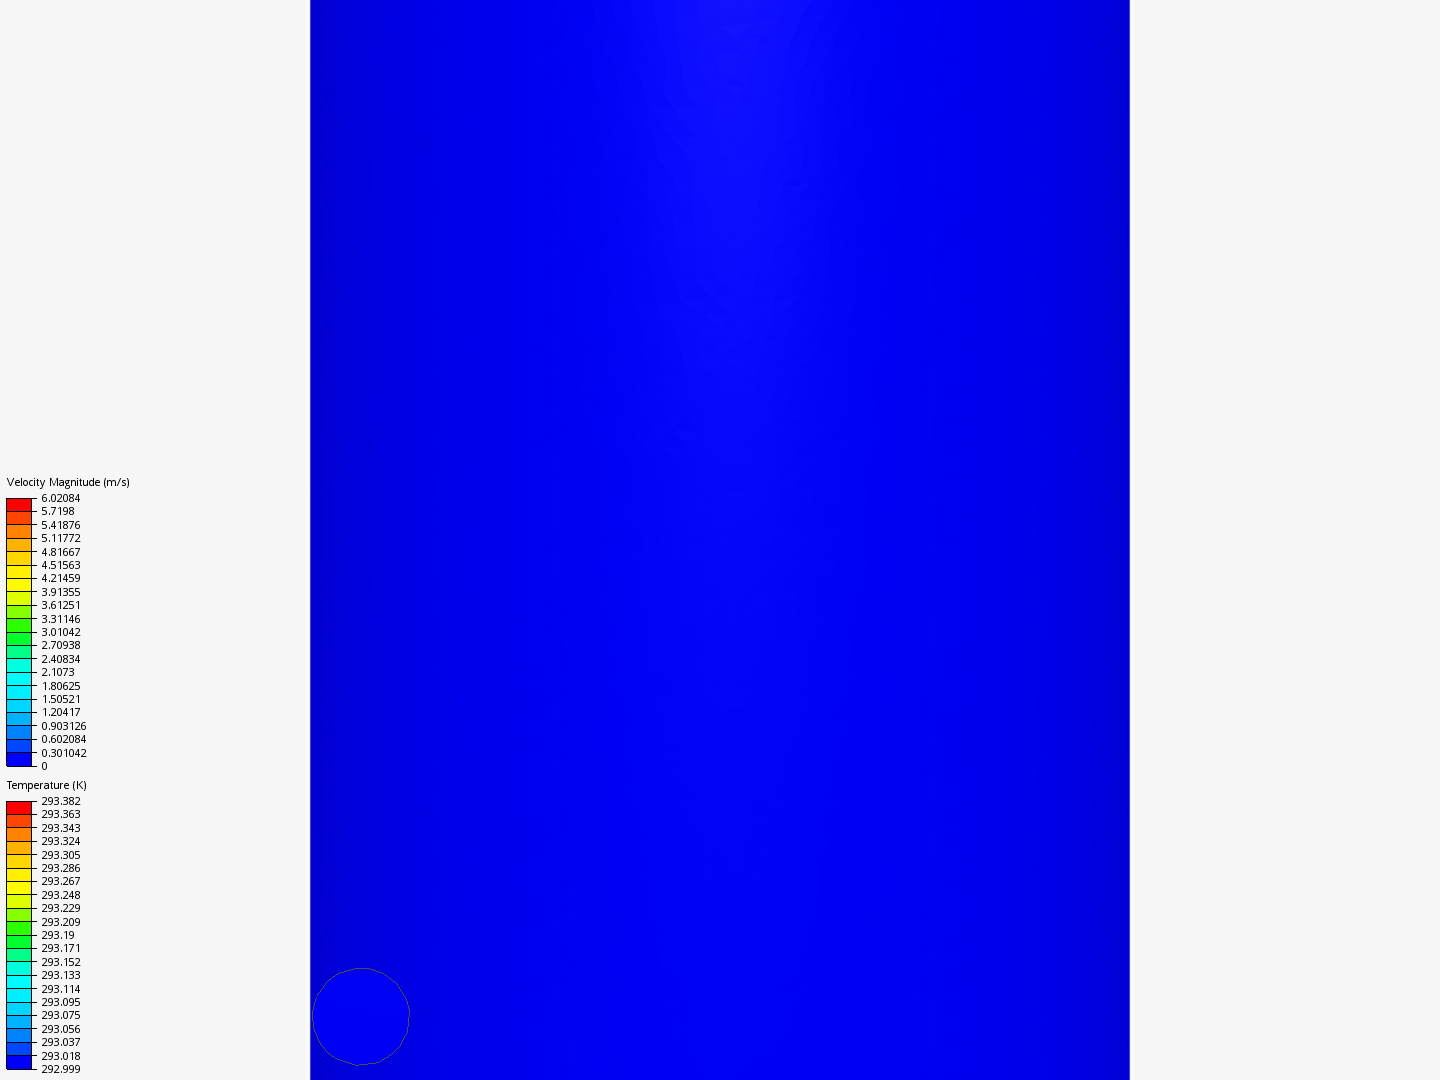 heat excahnger (radiator) image